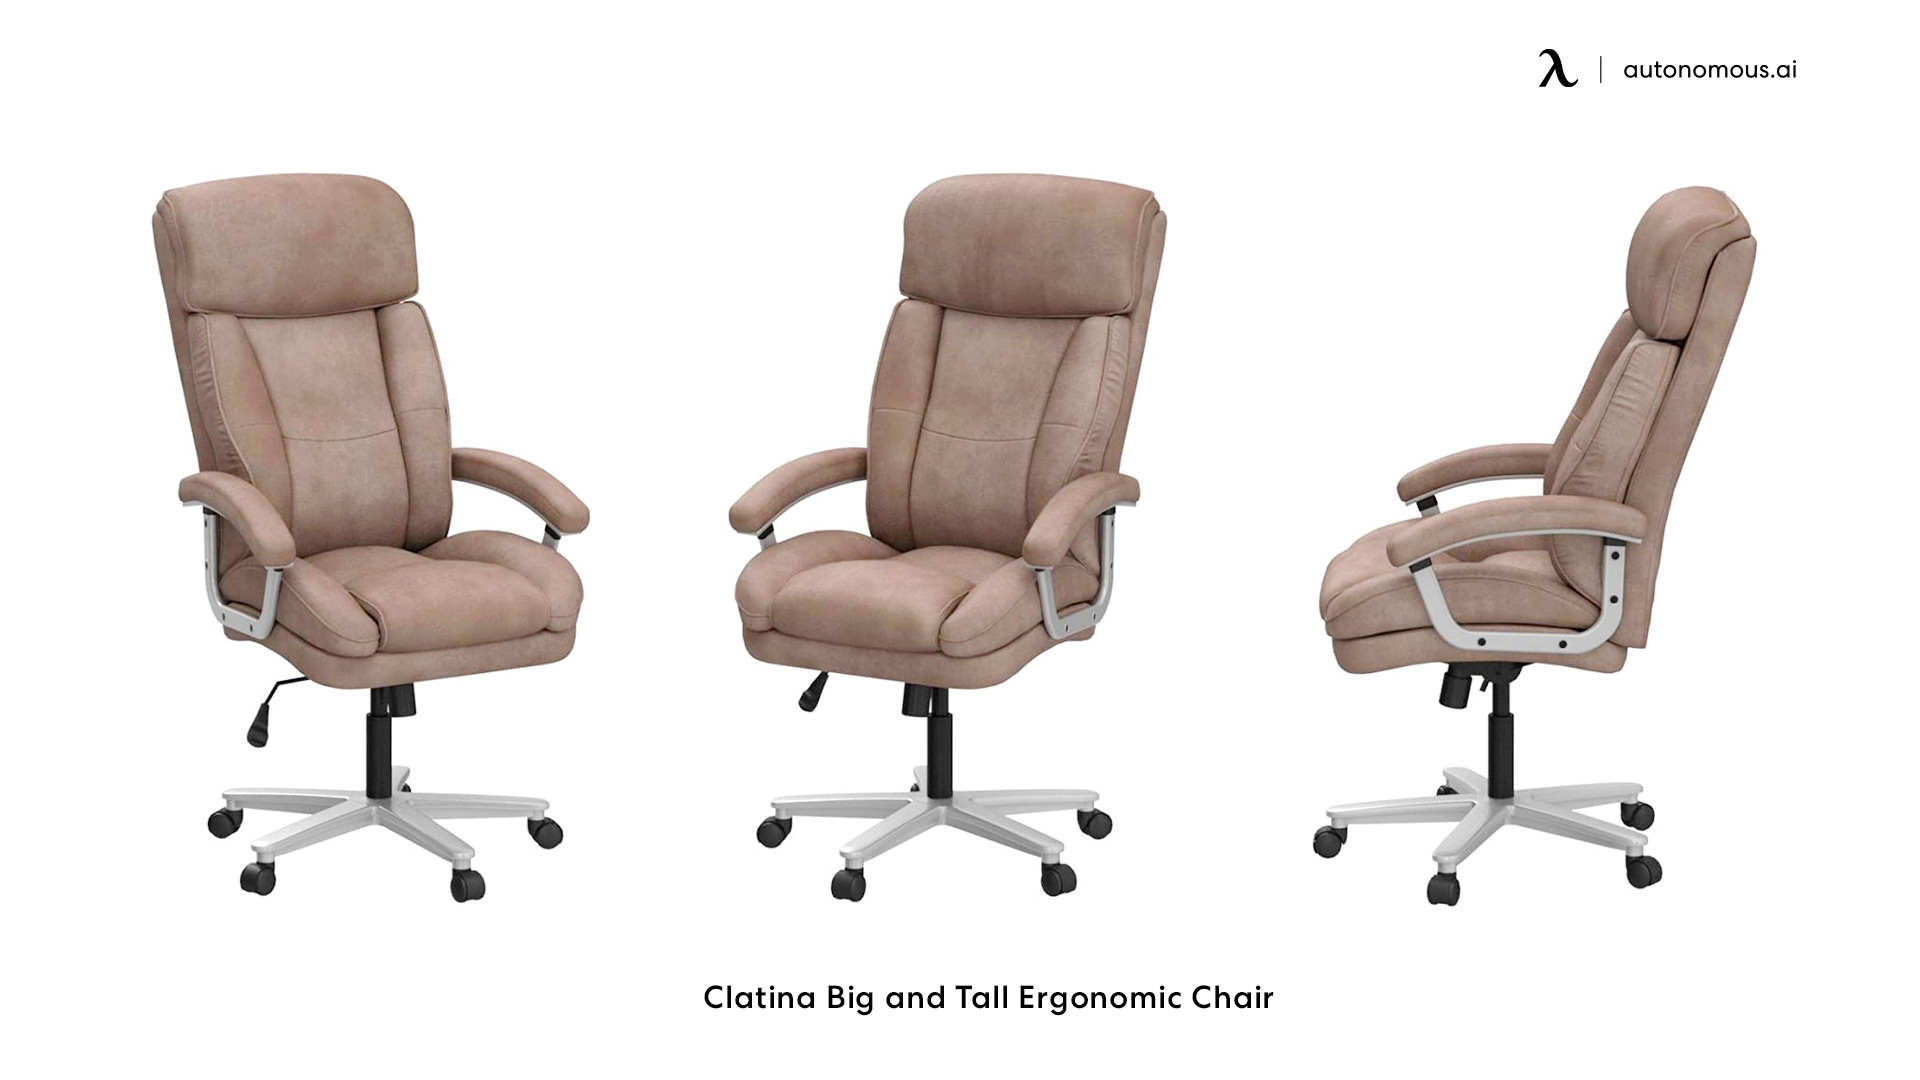 Clatina Big and Tall Ergonomic Chair